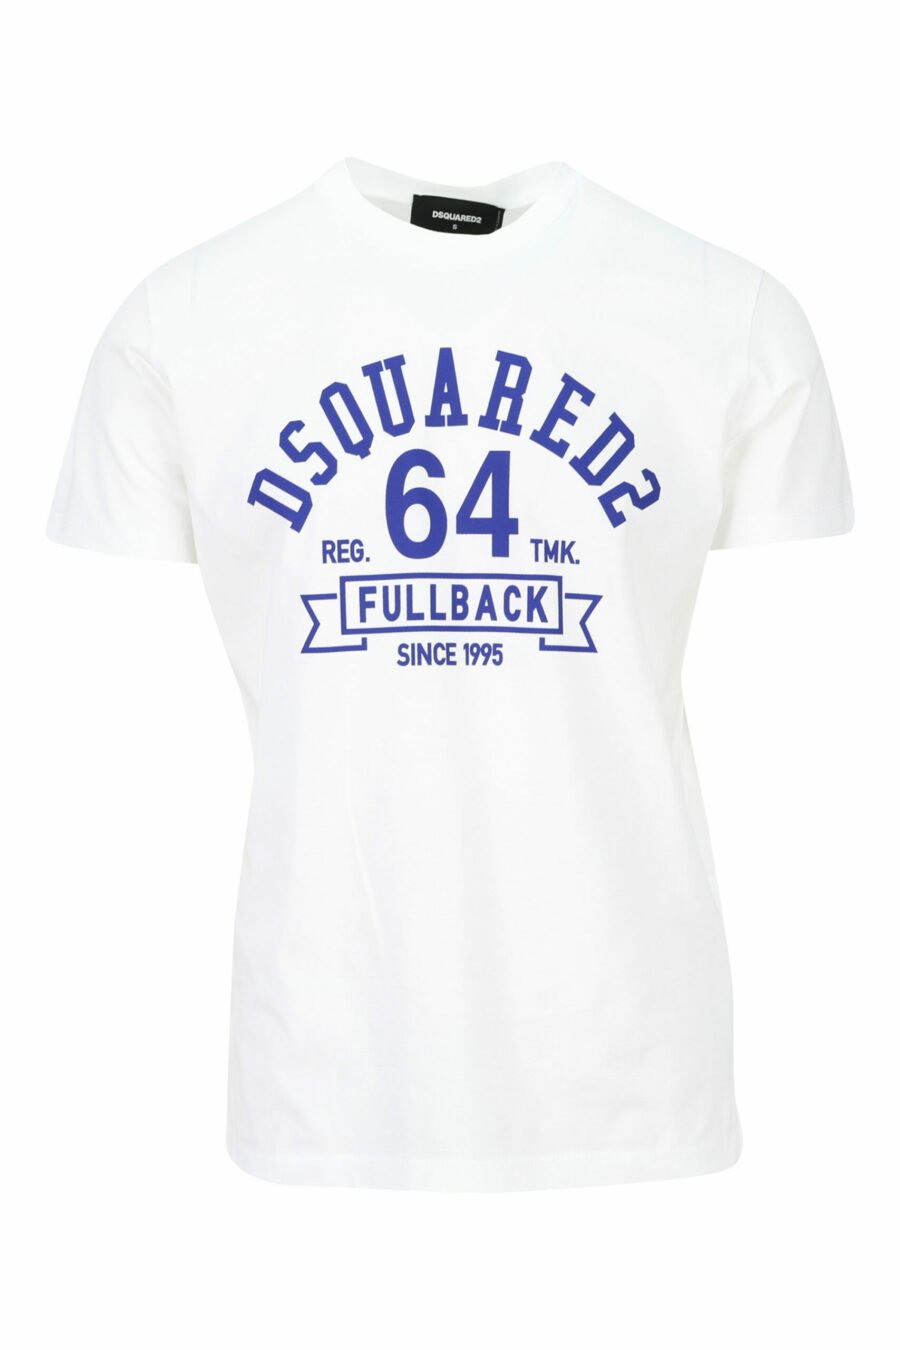 T-shirt blanc avec maxilogue bleu "college" - 8054148086442 scaled